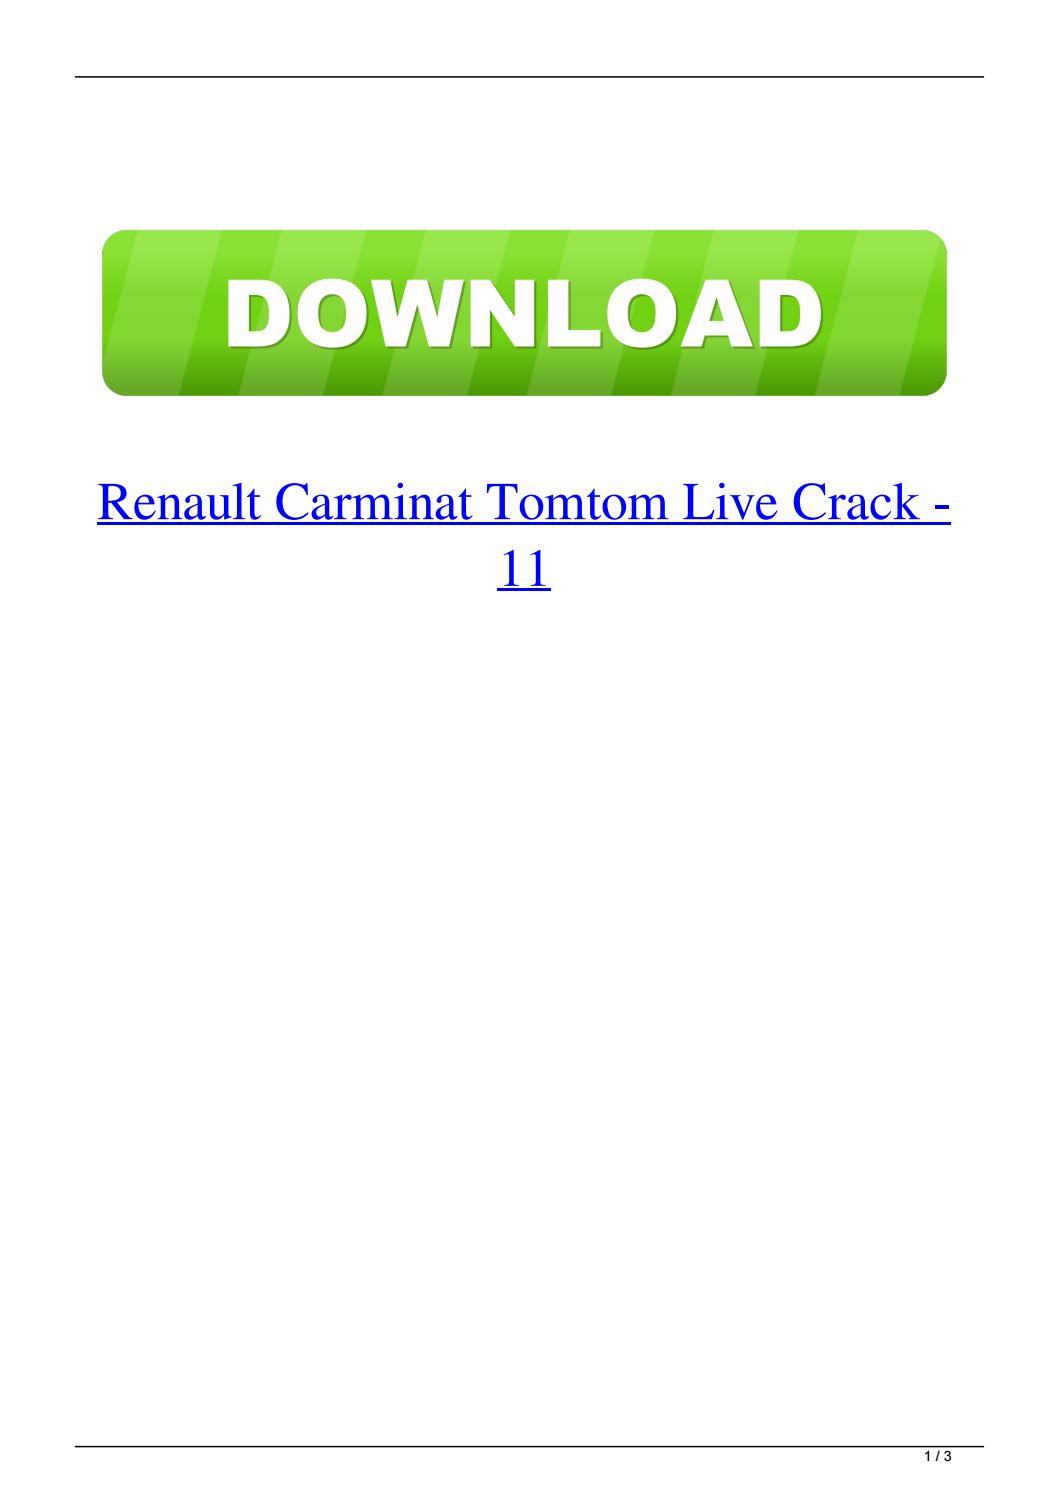 Carminat Tomtom Live Crack